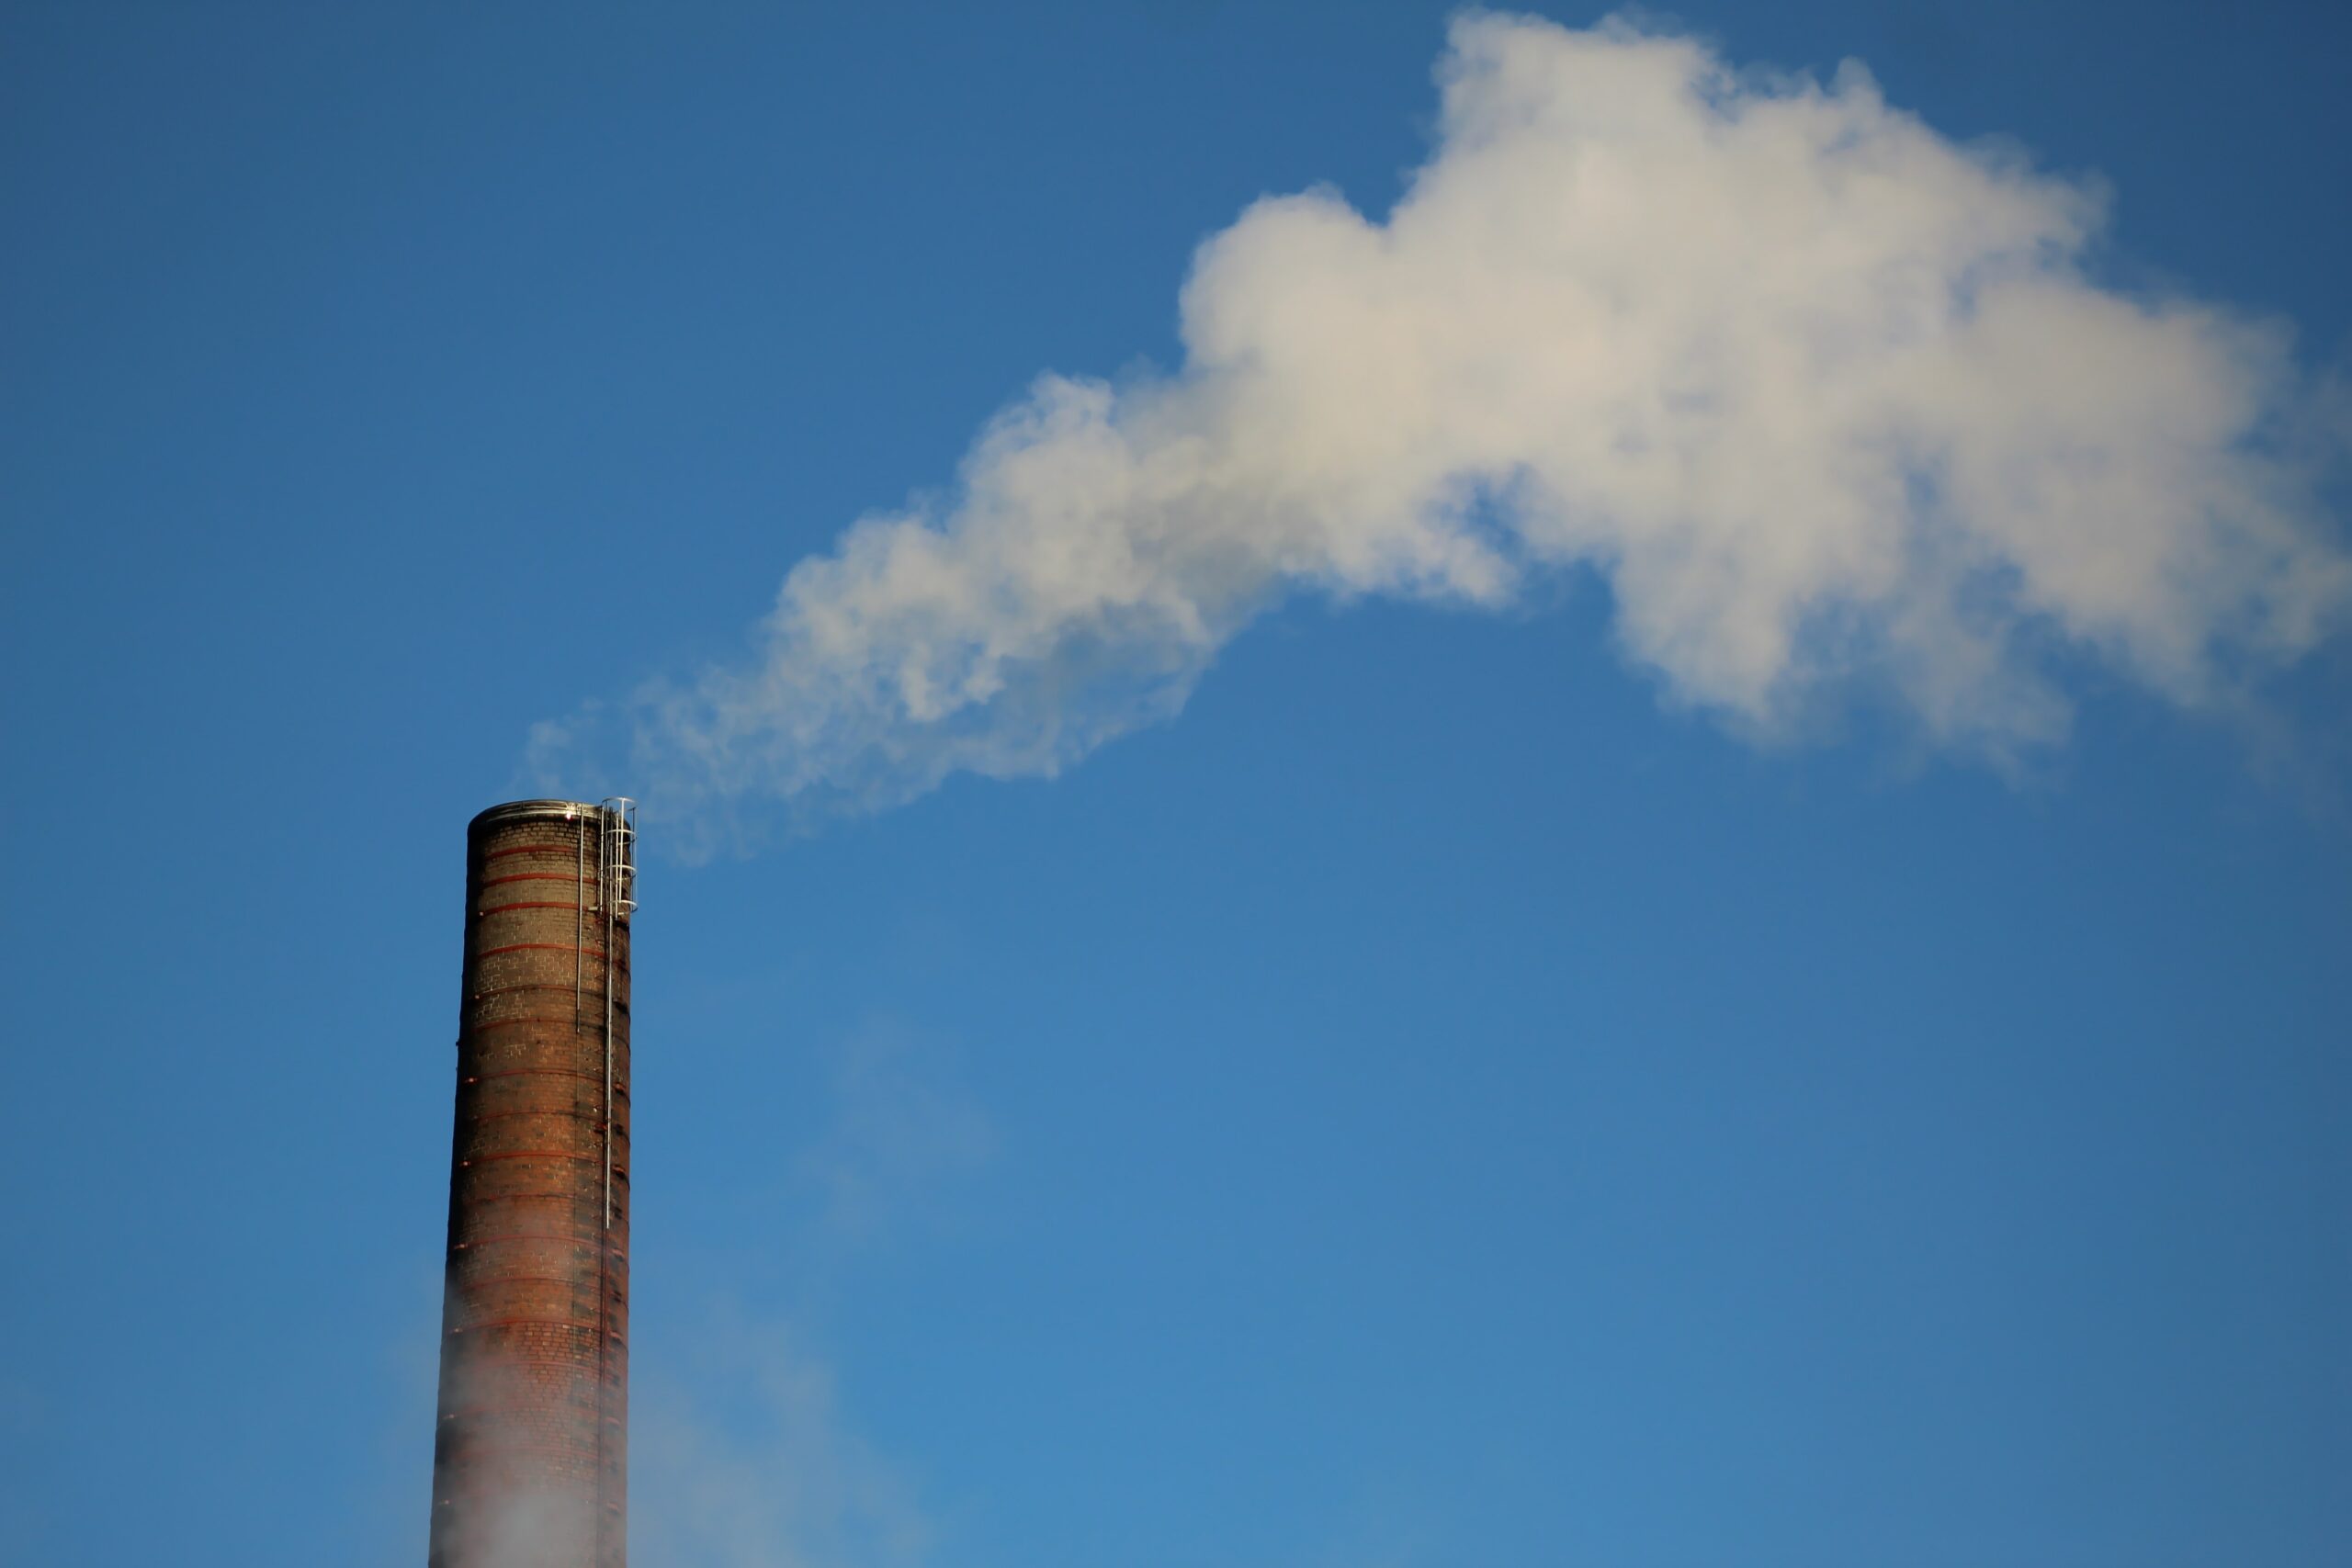 ESMA publishes its final report on the EU carbon market